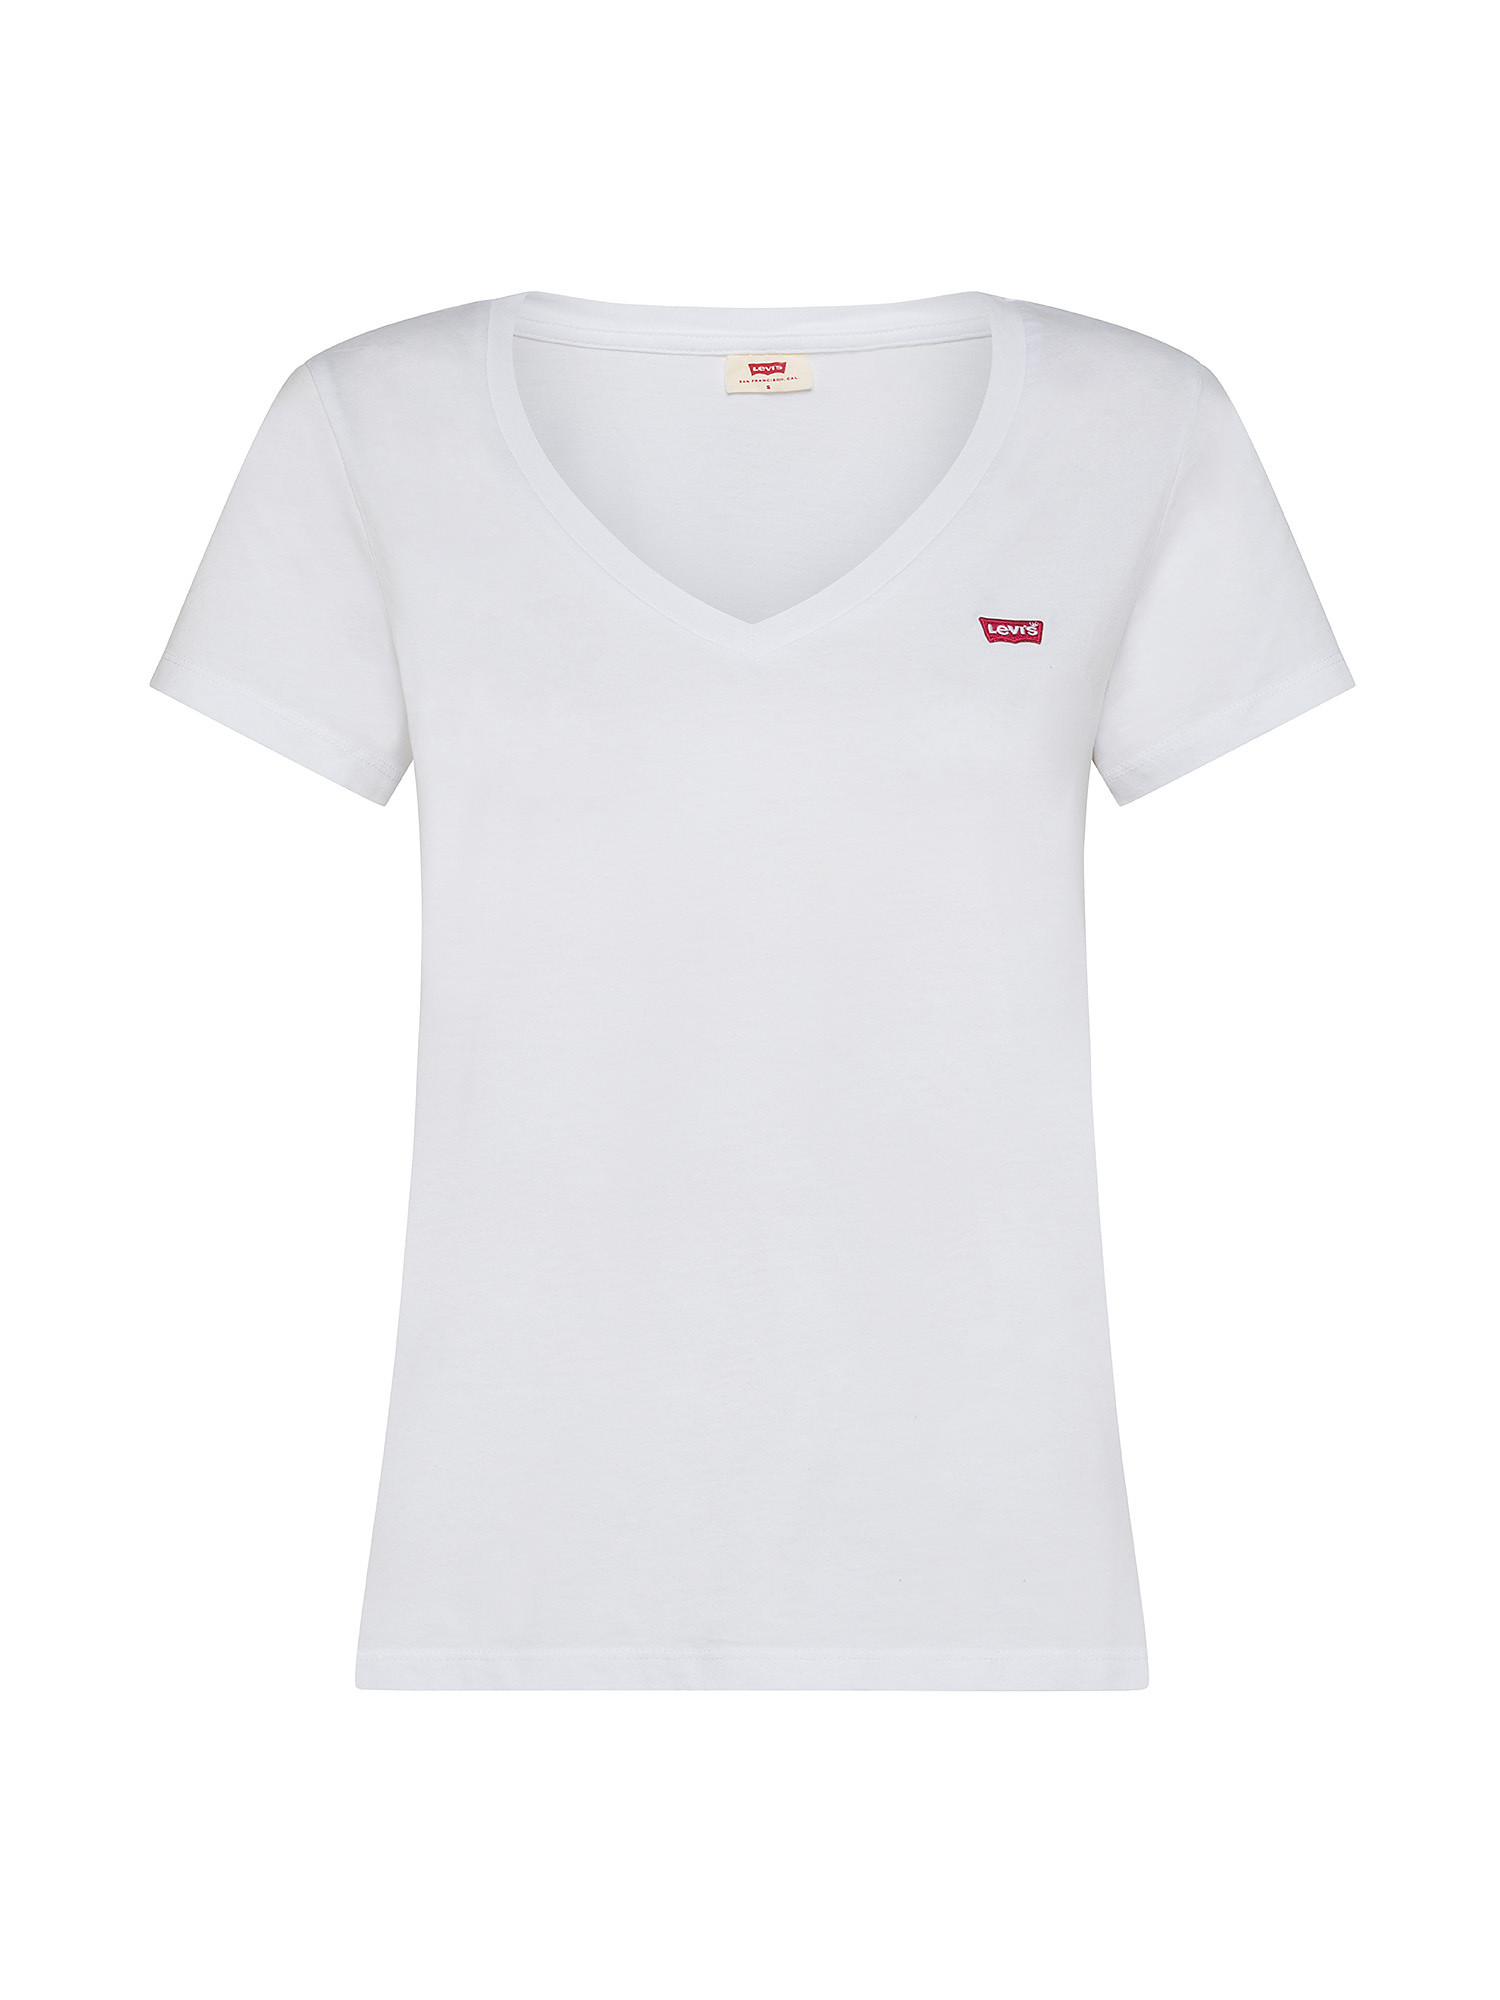 Levi's - T-shirt con logo e scollo a v, Bianco, large image number 0